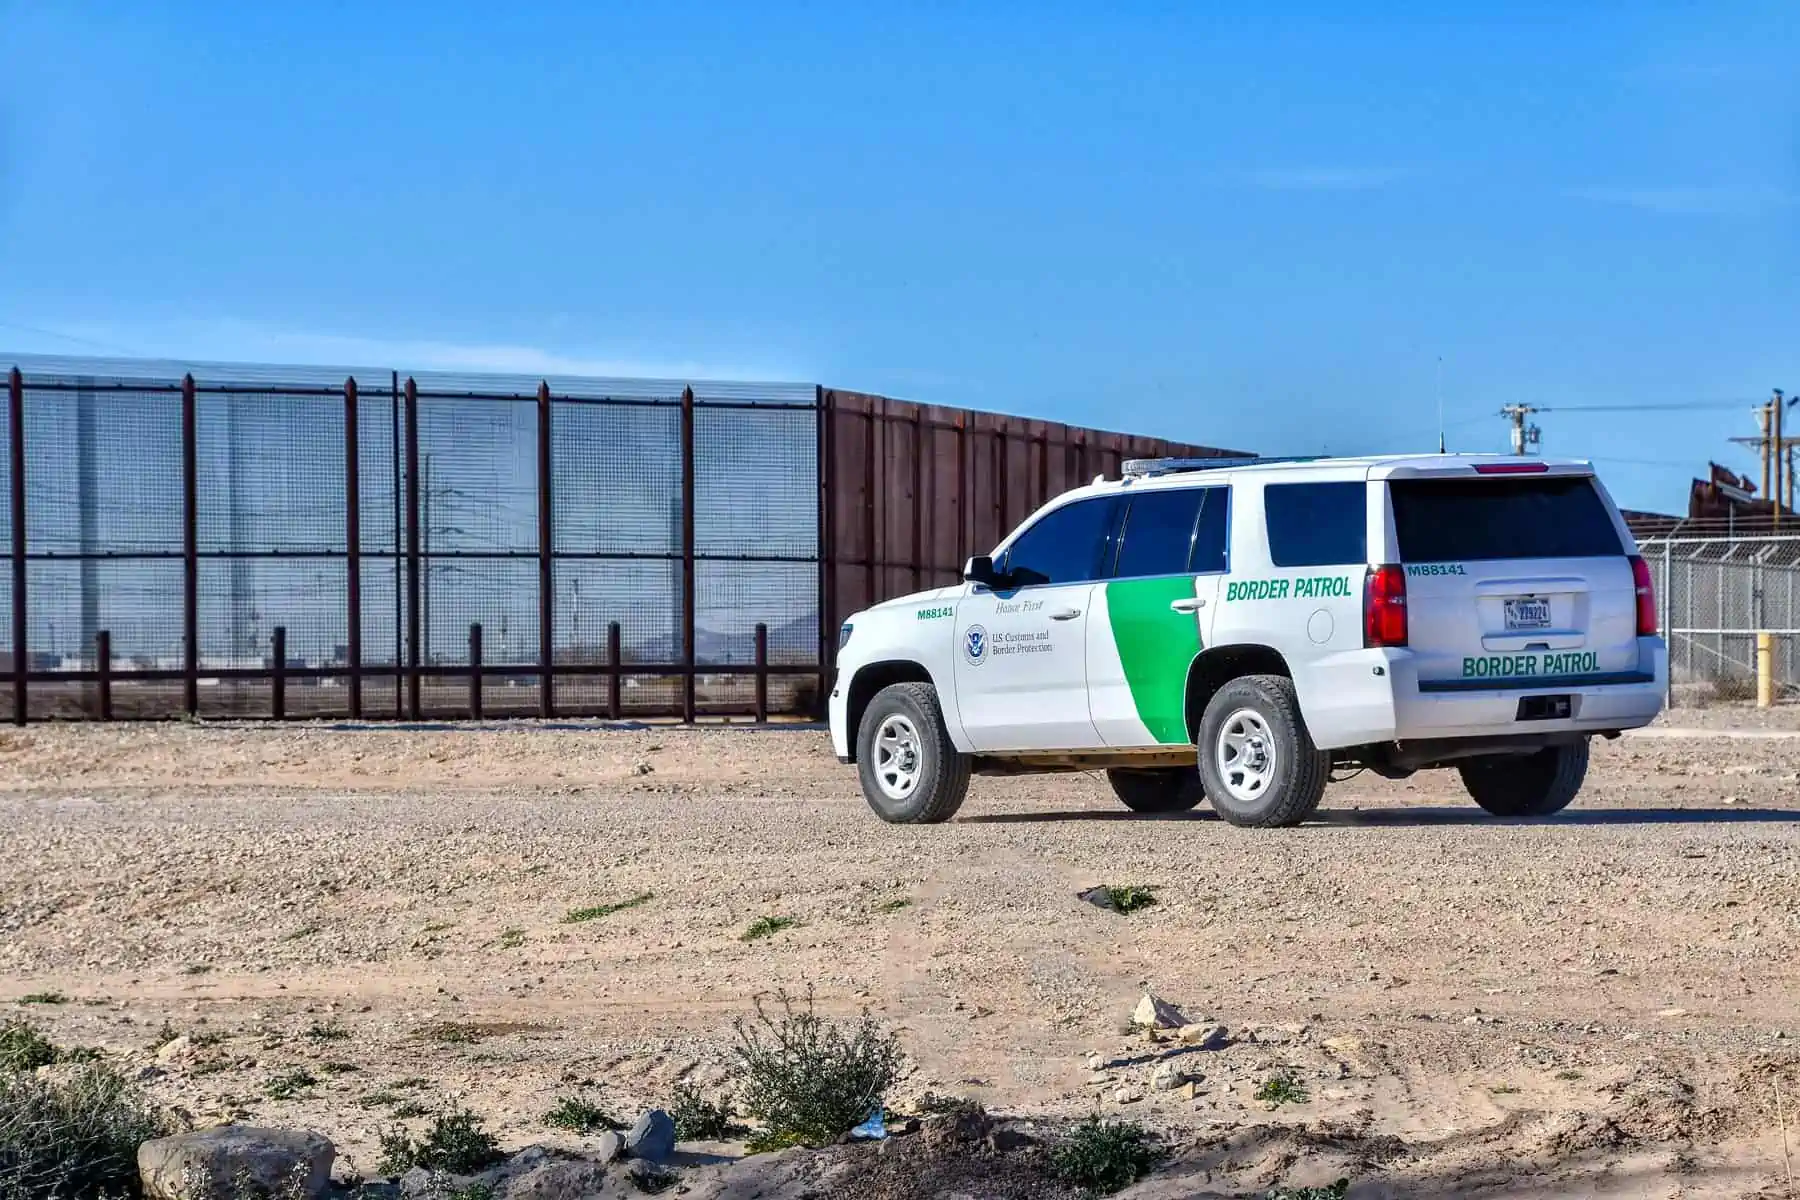 Texas Reforzara con Efectivos Militares su Frontera con Mexico